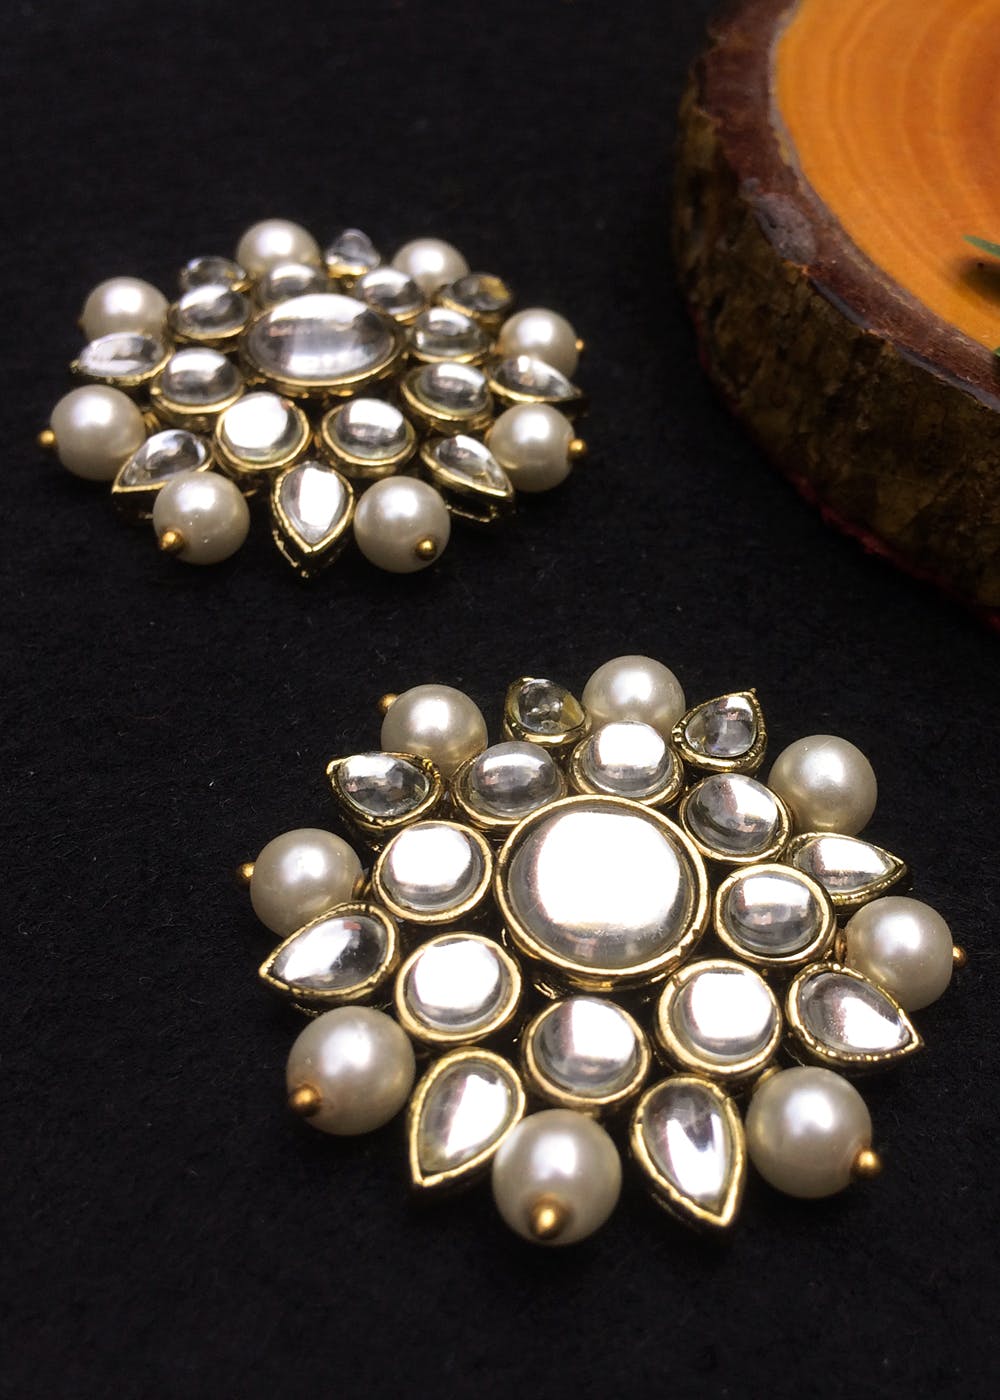 Manya Silver Choker NecklaceBuy 24k Gold Plated Indian Jewelry Online  KO  Jewellery